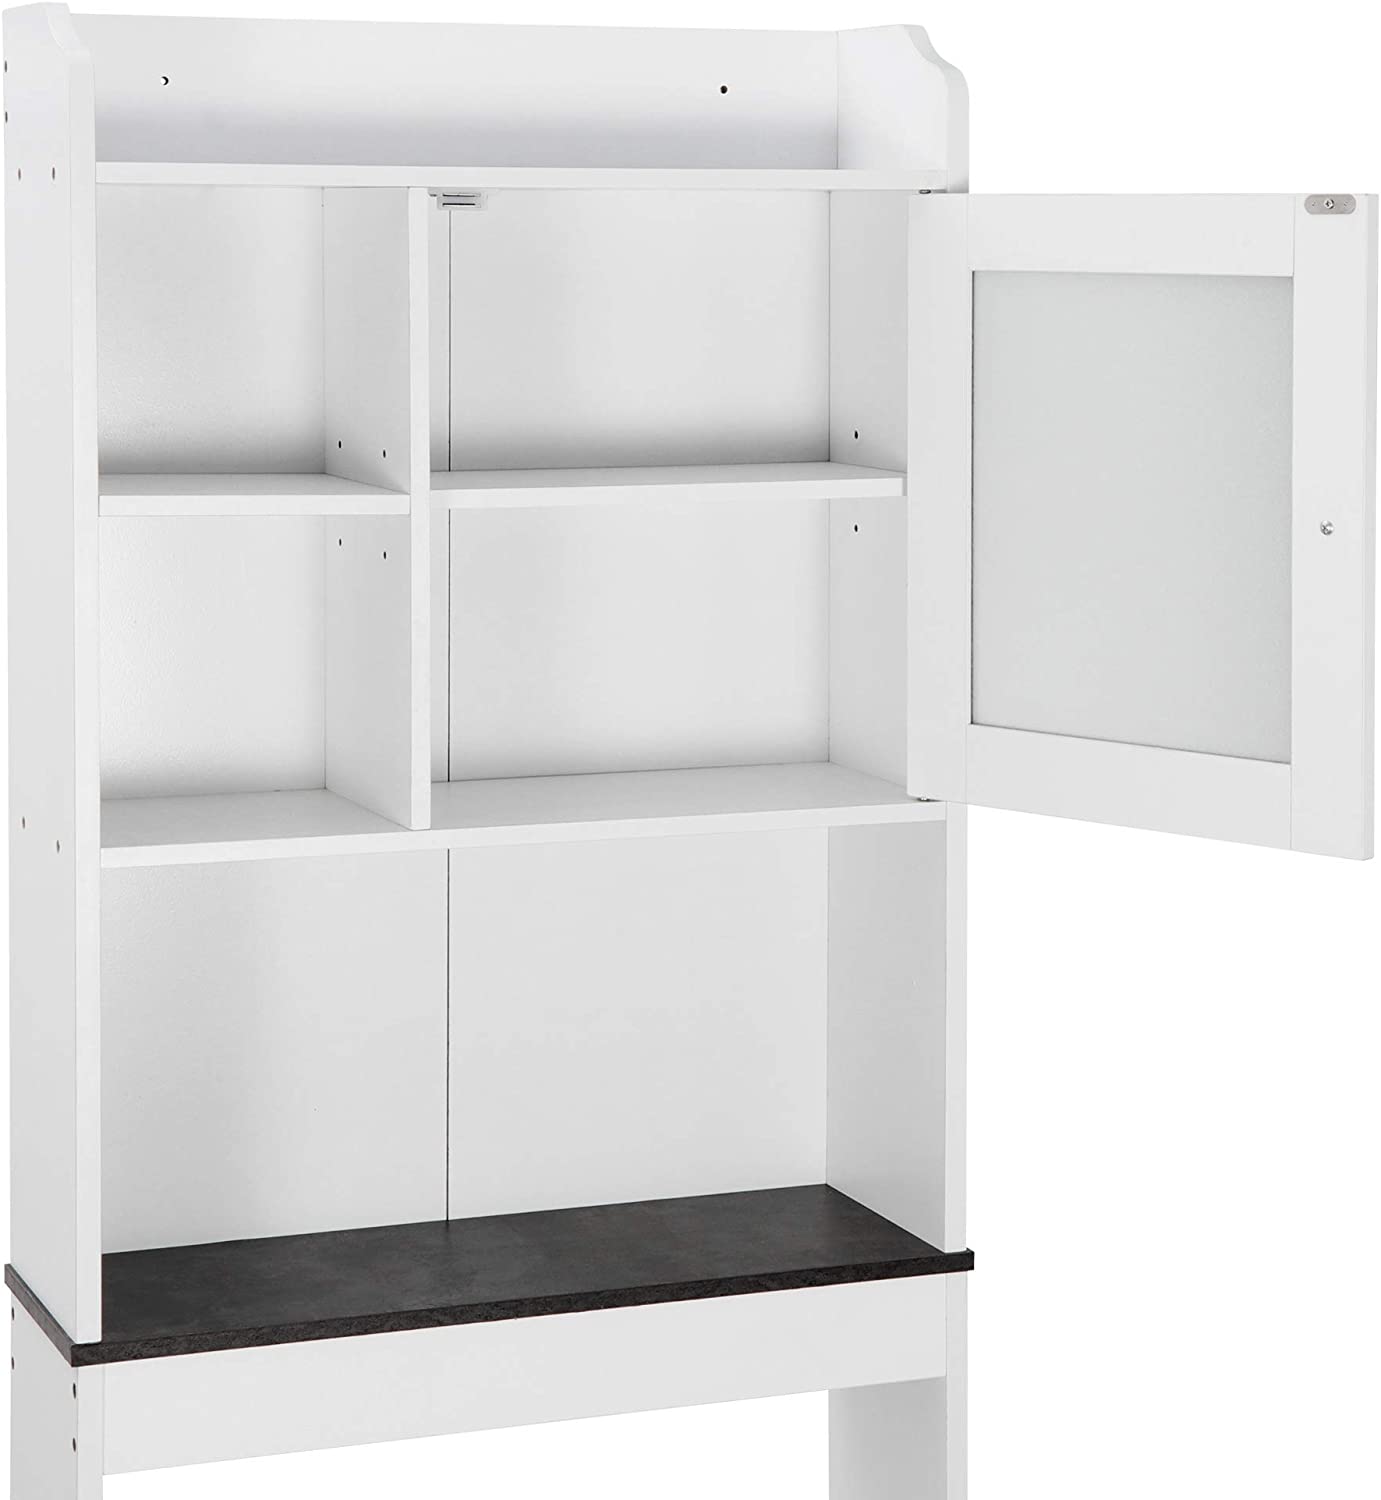 Over The Toilet Cabinet, Freestanding Bathroom Storage Cabinet, Space-Saving Toilet Storage Wood Cabinet w/Adjustable Shelves, White